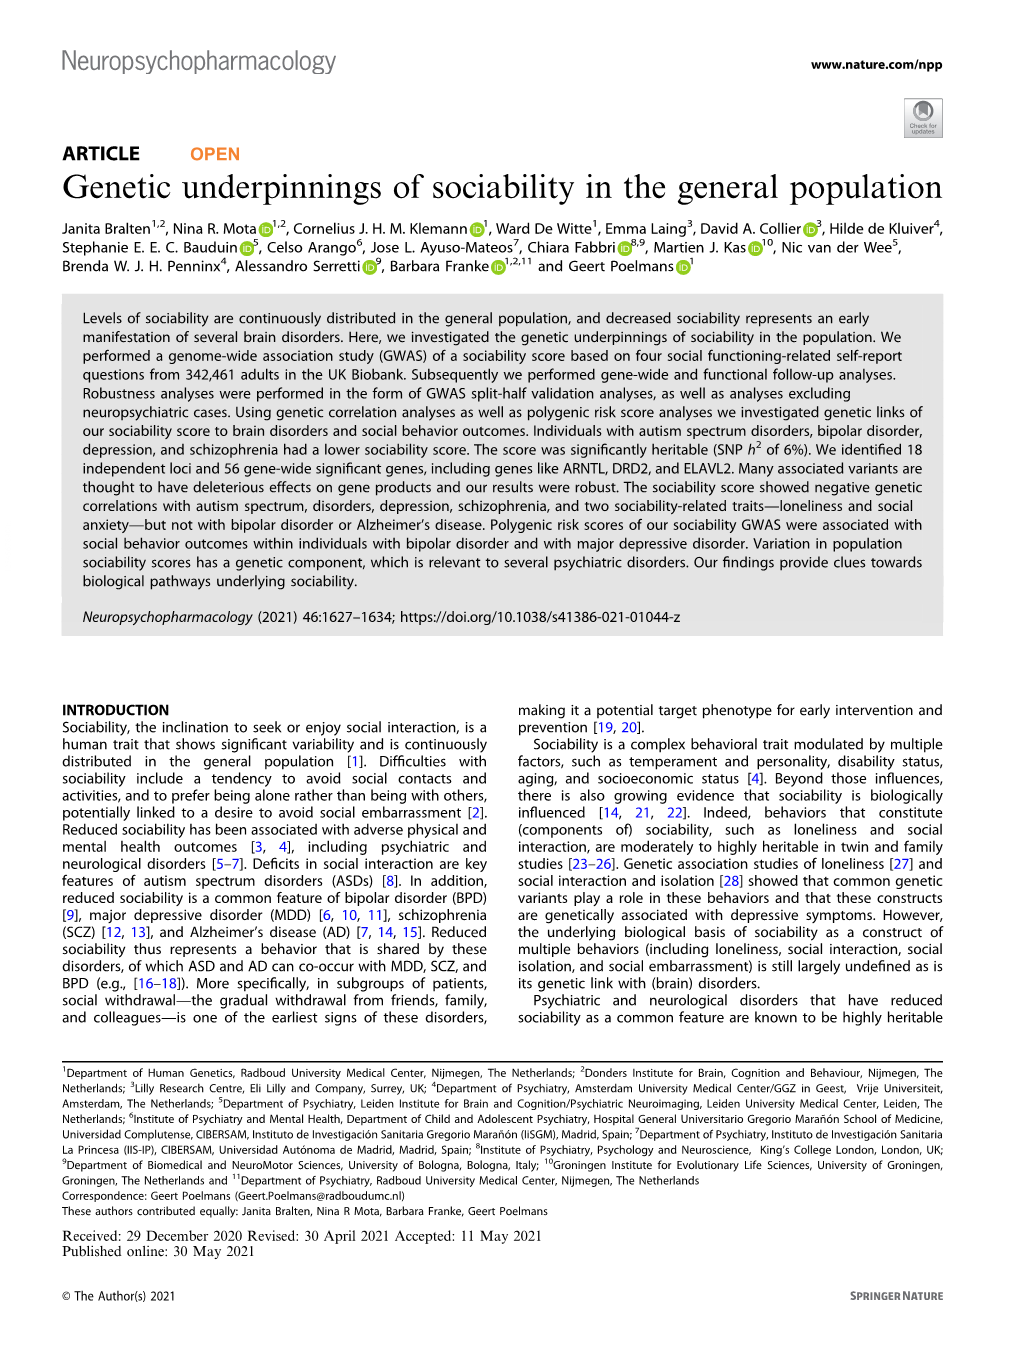 Genetic Underpinnings of Sociability in the General Population